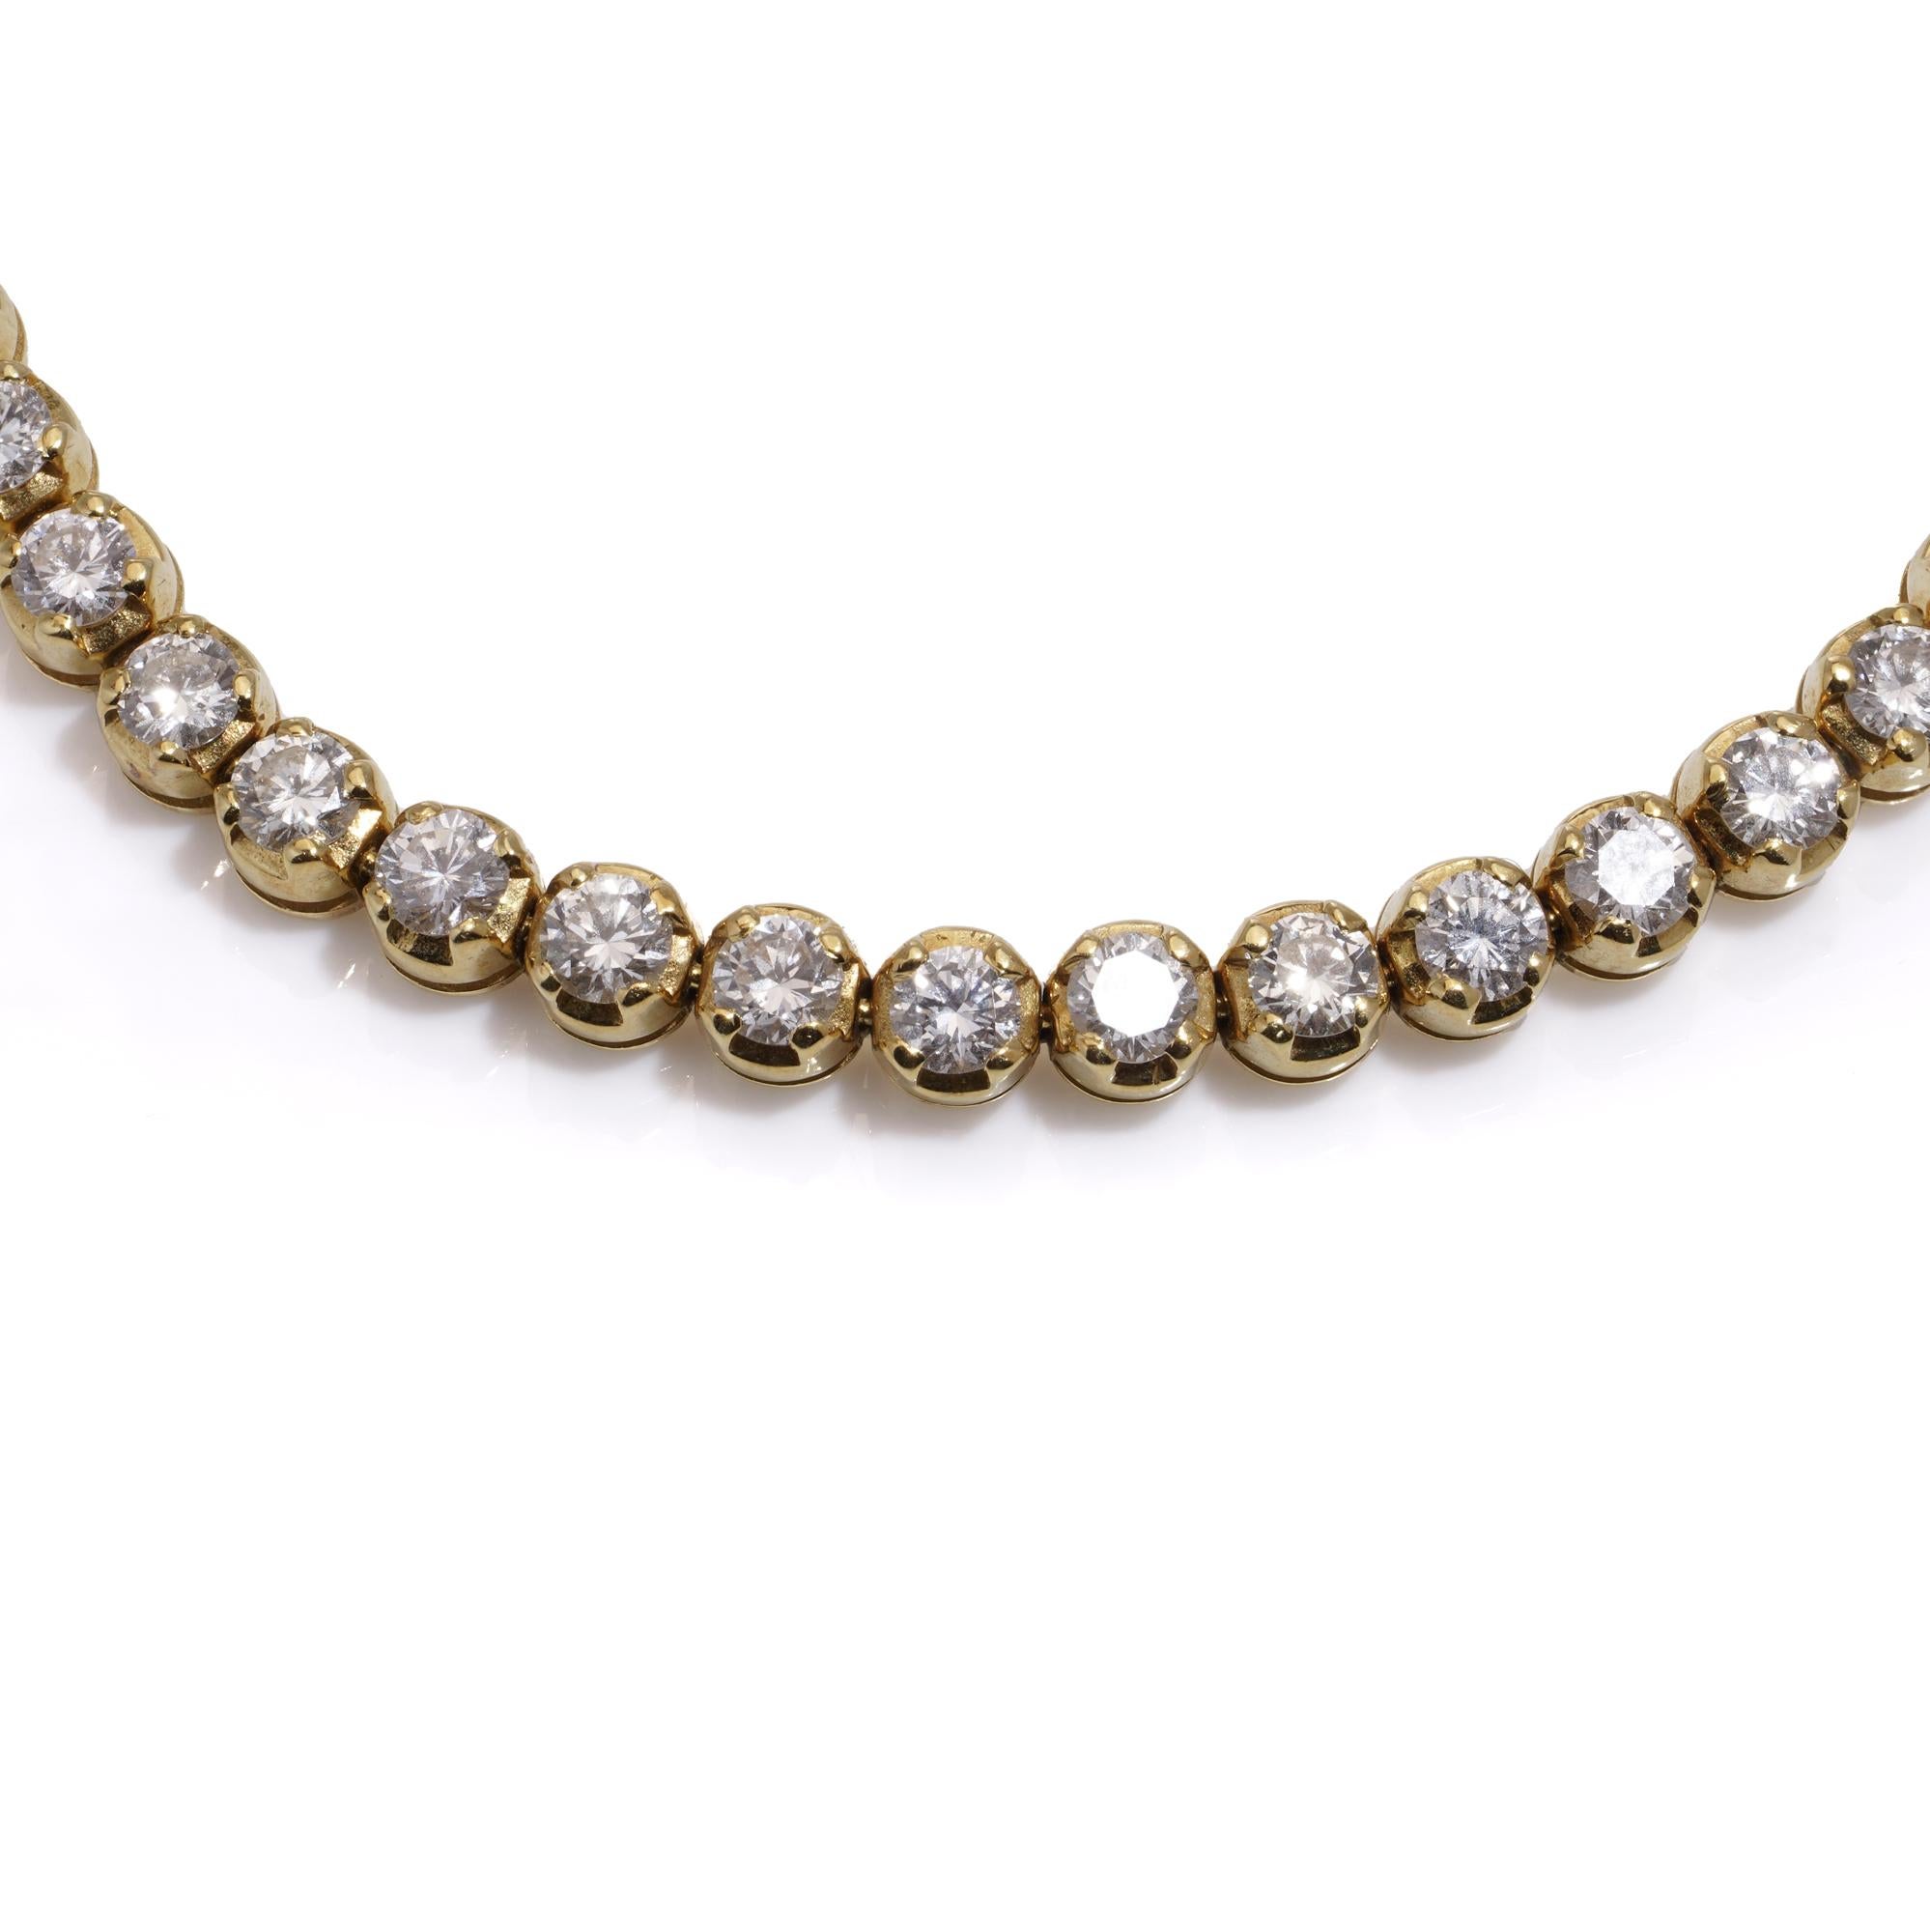 Brilliant Cut 18kt gold tennis bracelet set with 6.30 carats of round brilliant diamonds  For Sale